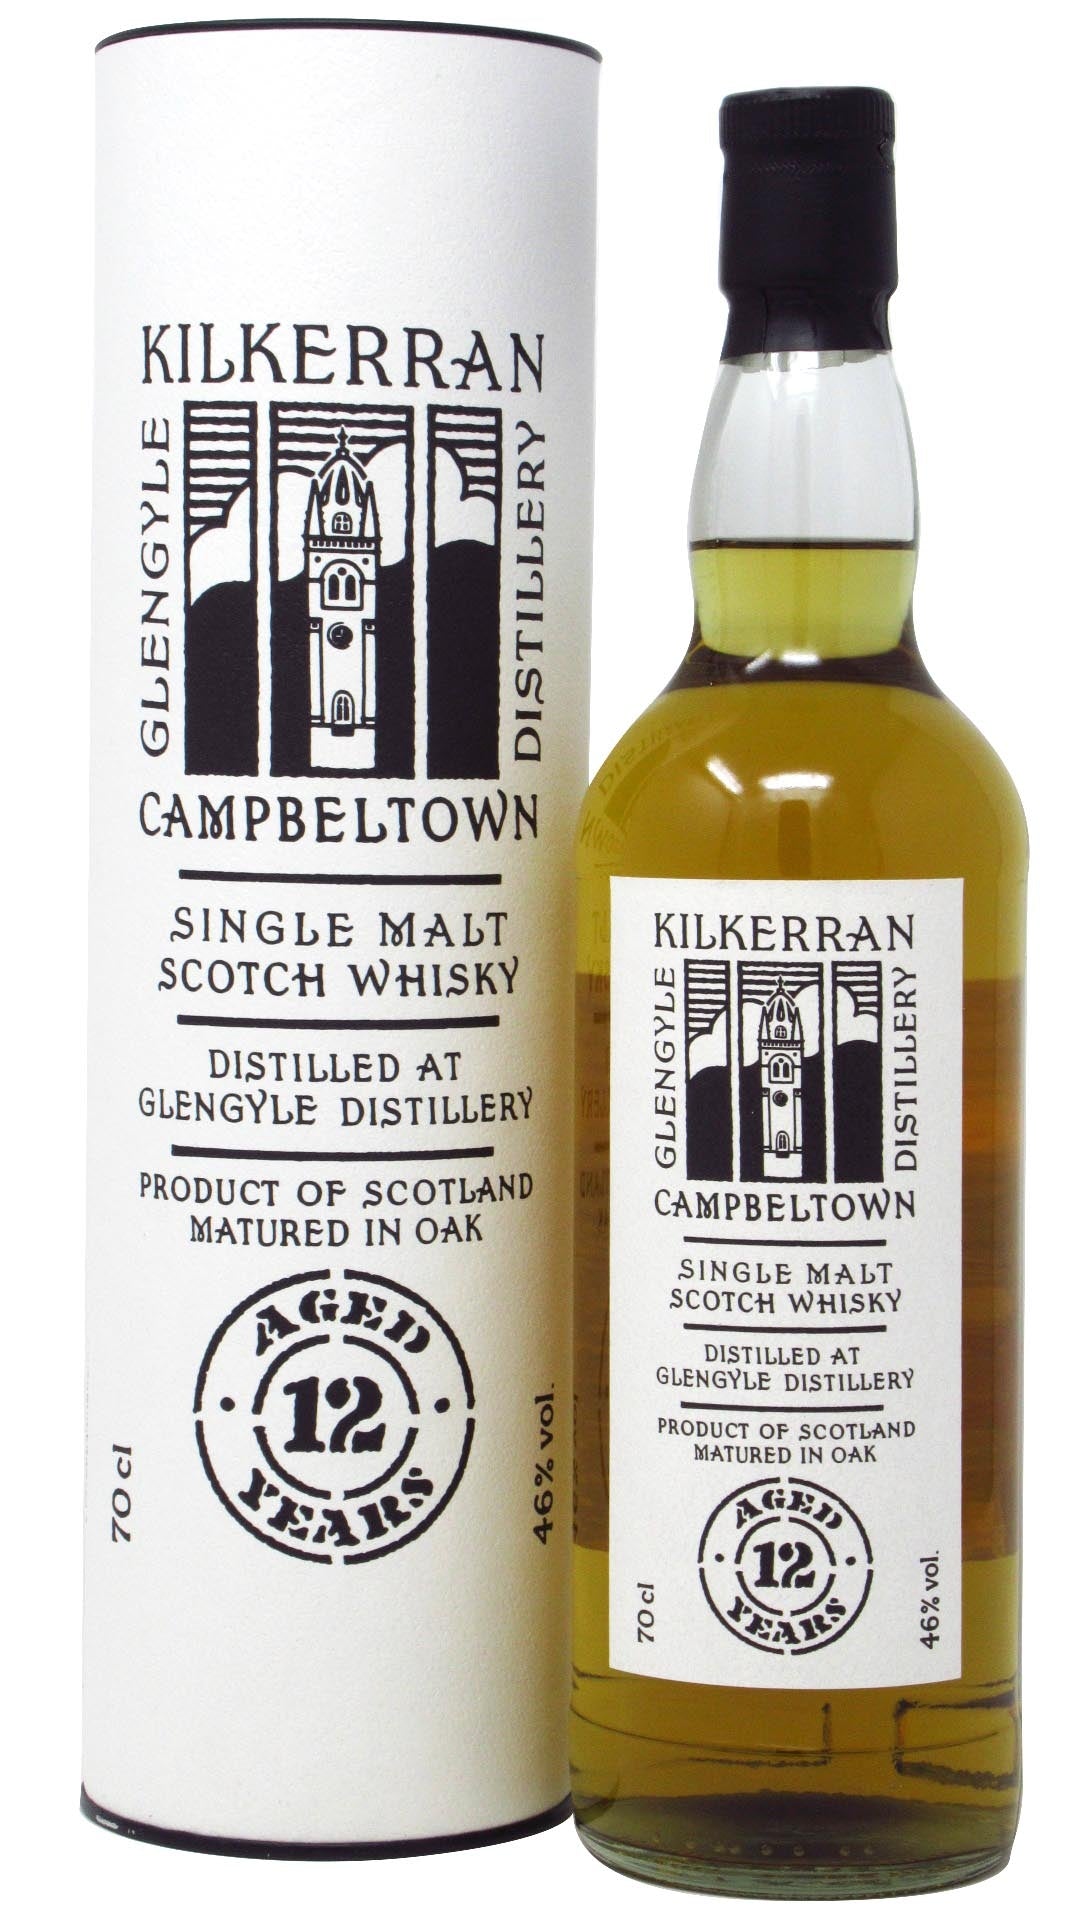 Kilkerran Campbeltown Single Malt Scotch Whisky 12 Year